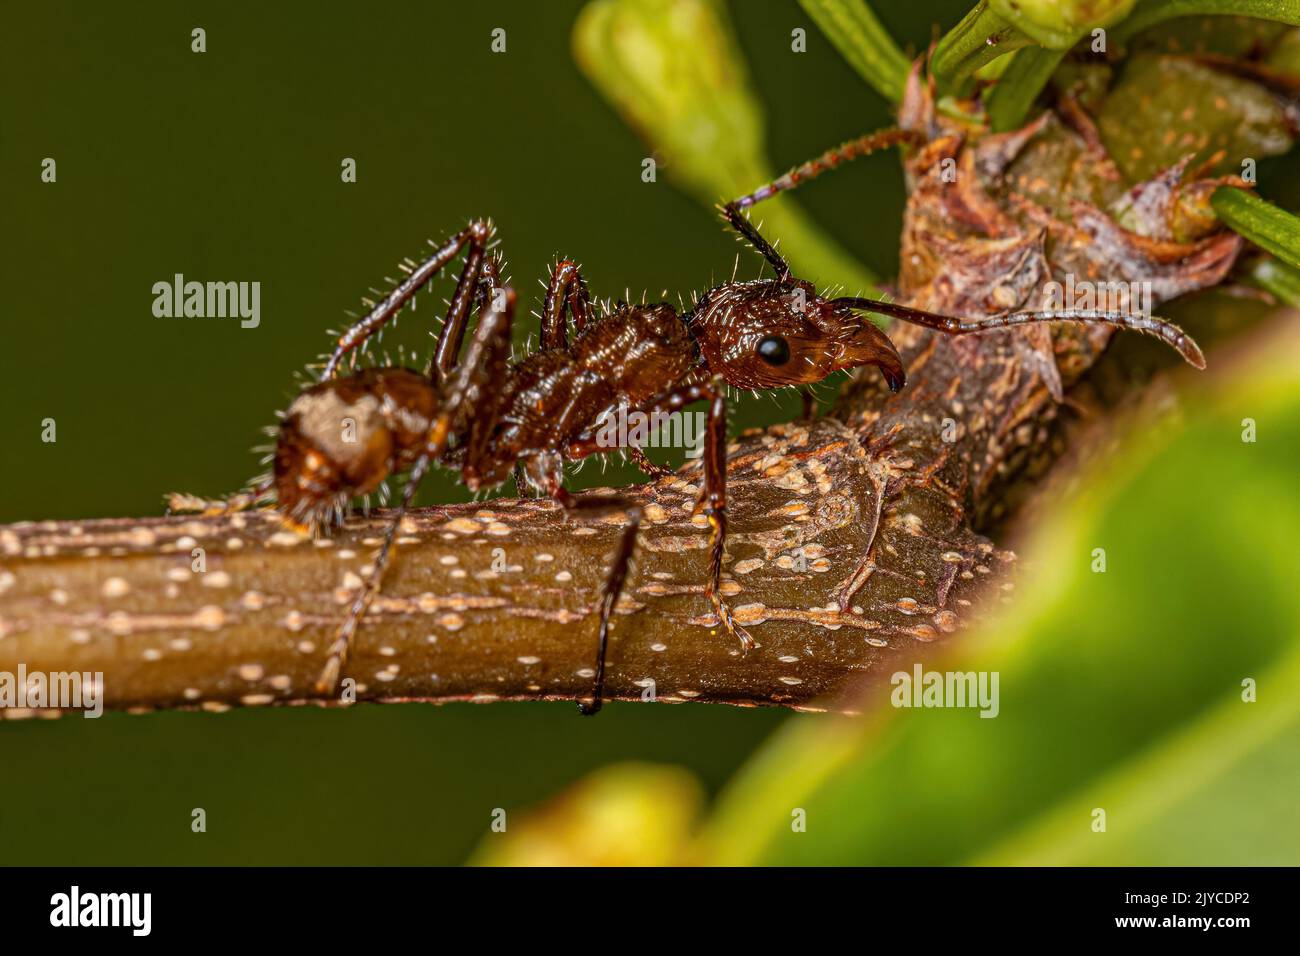 Adult Female Ectatommine Ant of the Genus Ectatomma Stock Photo